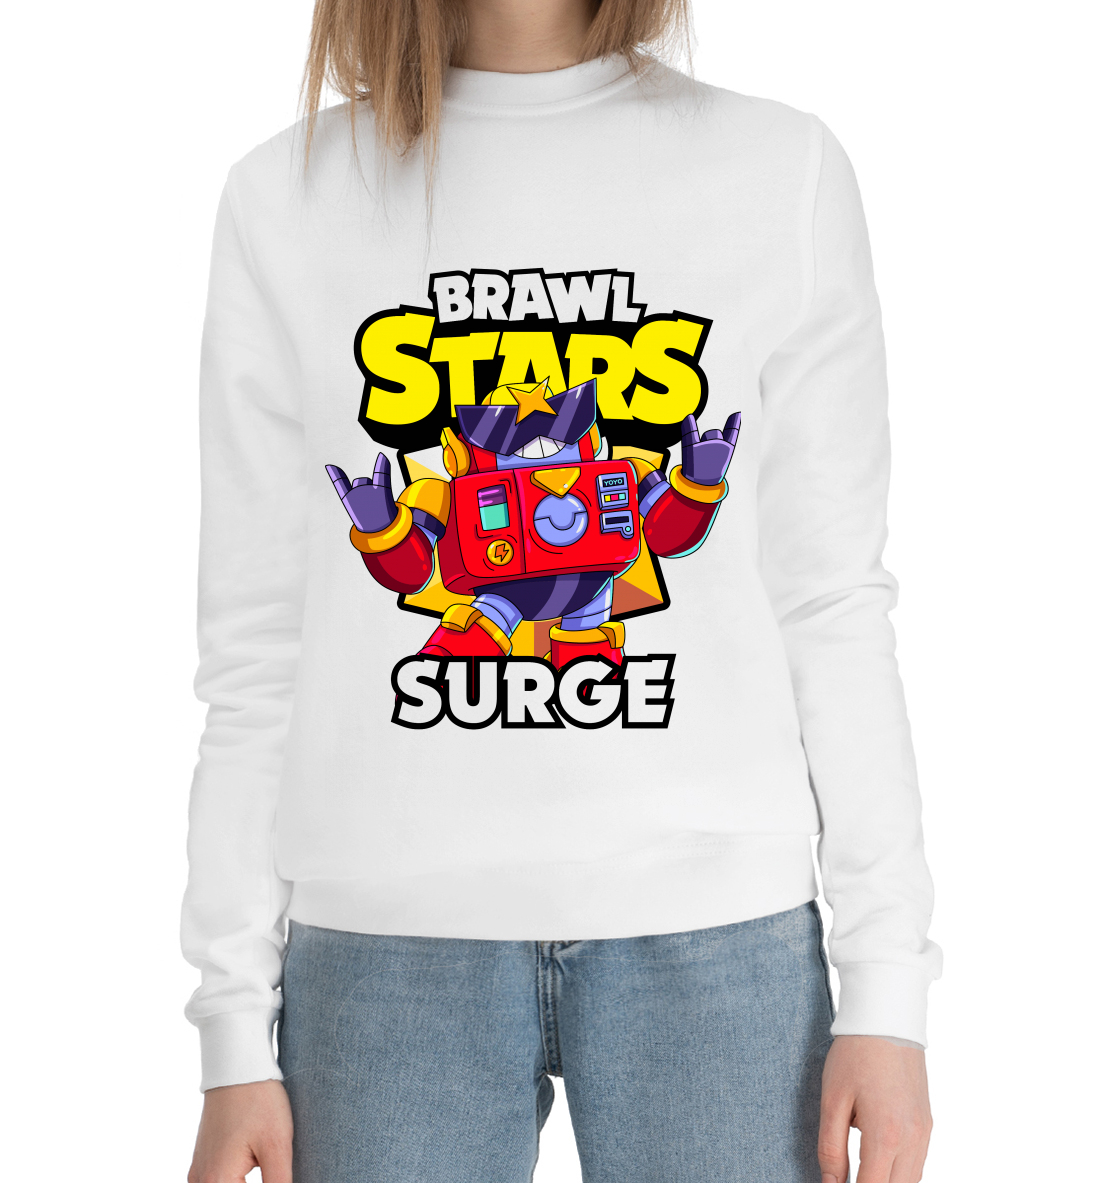 Женский Хлопковый свитшот с принтом Brawl Stars, Surge, артикул CLH-418828-hsw-1mp